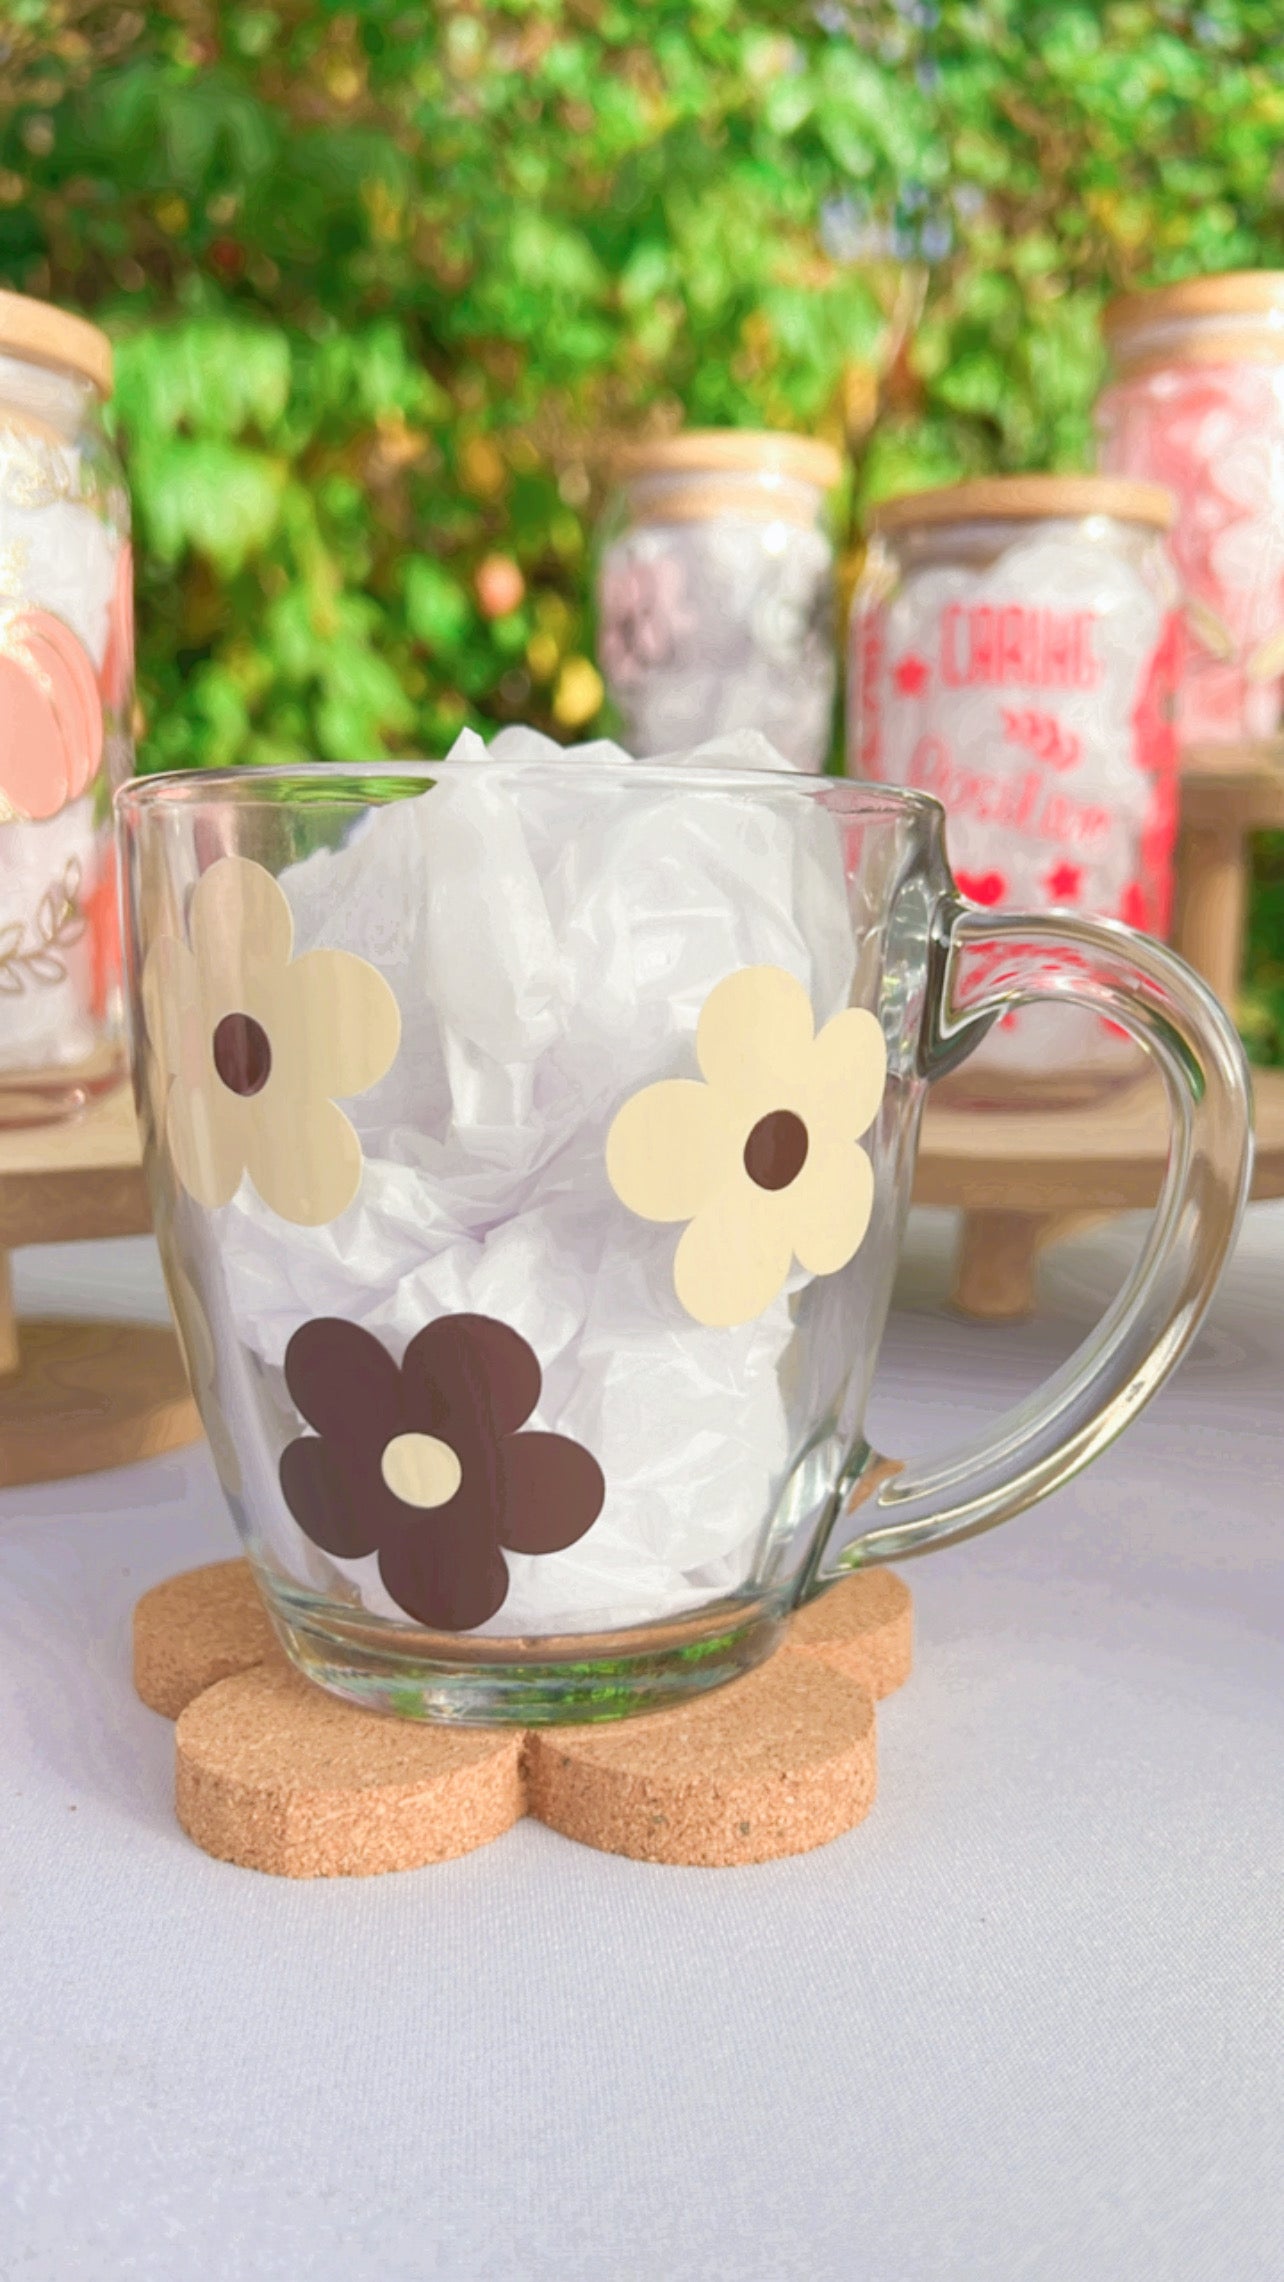 Daisy coffee glass mug